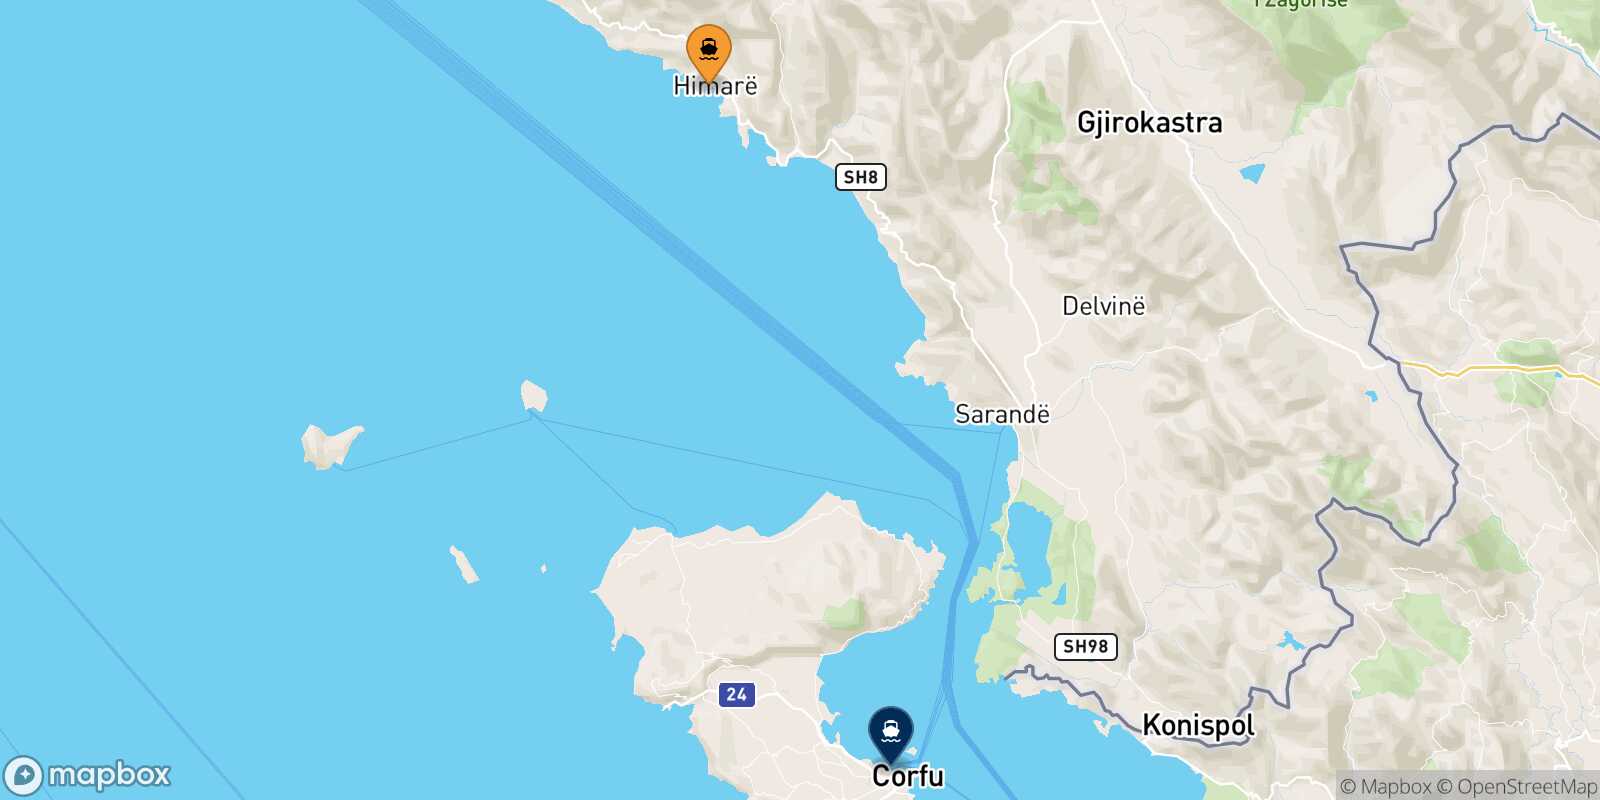 Himare Corfu route map